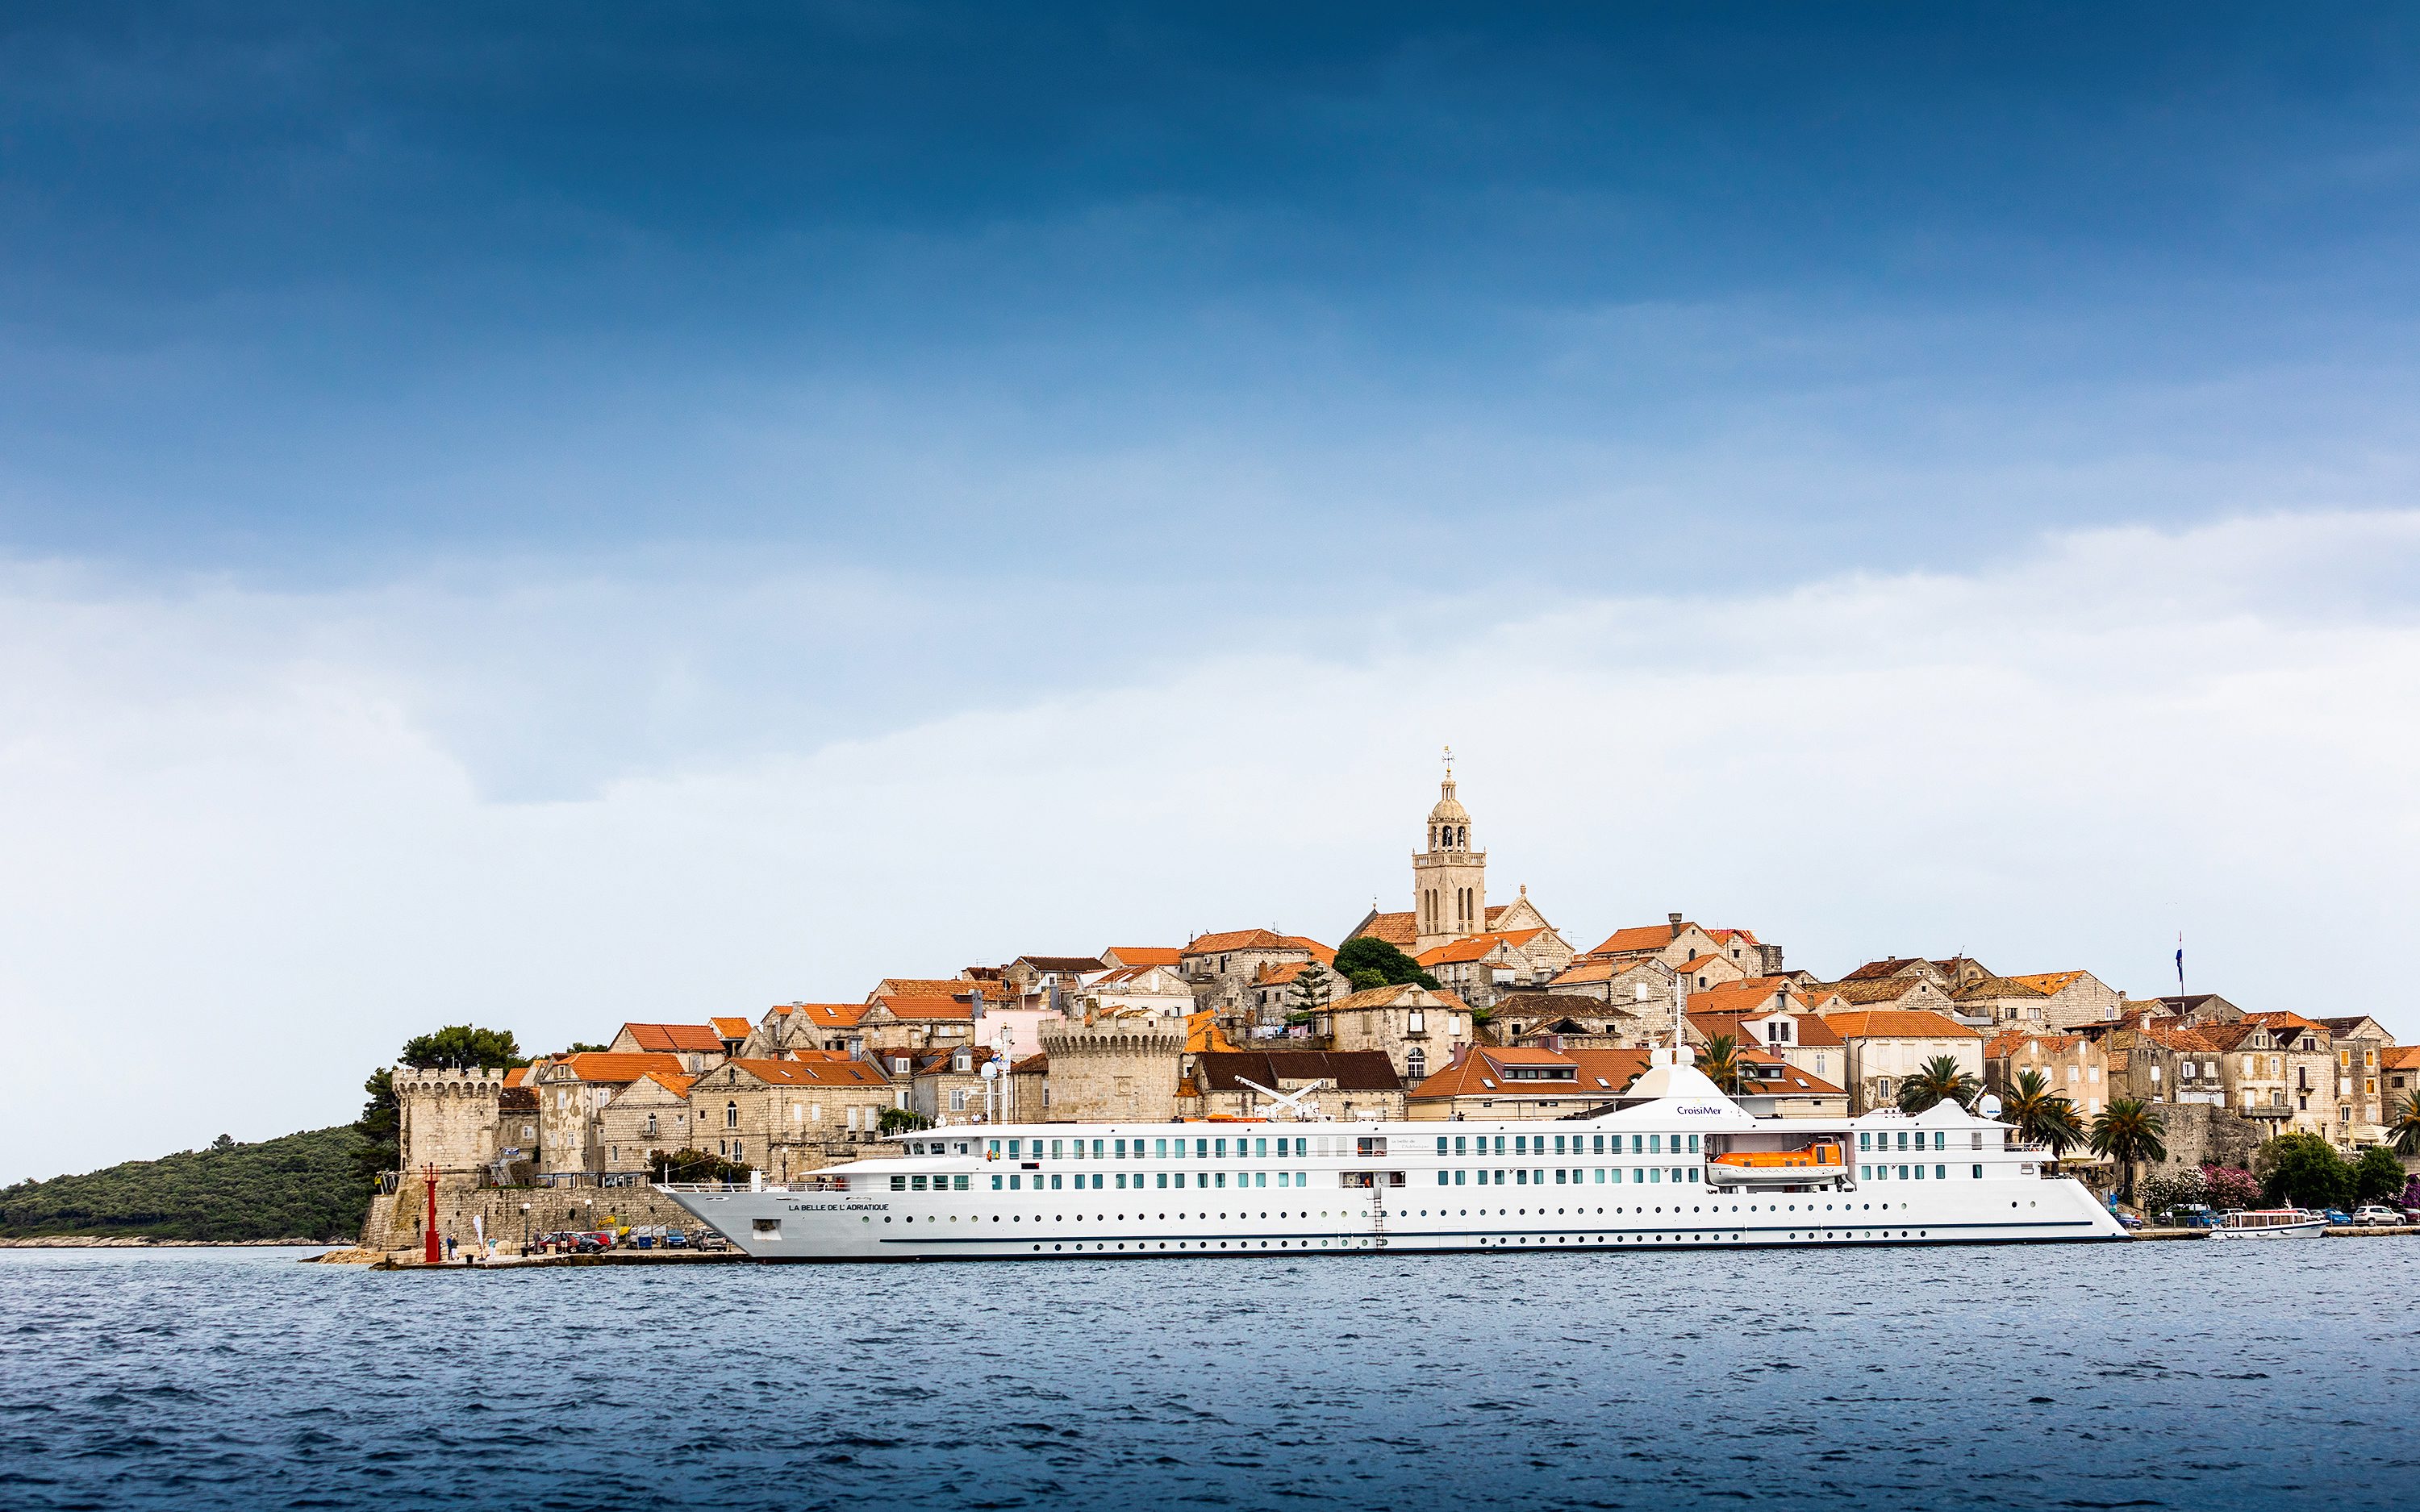 Cruiser Visiting: La Belle de l' Adriatique